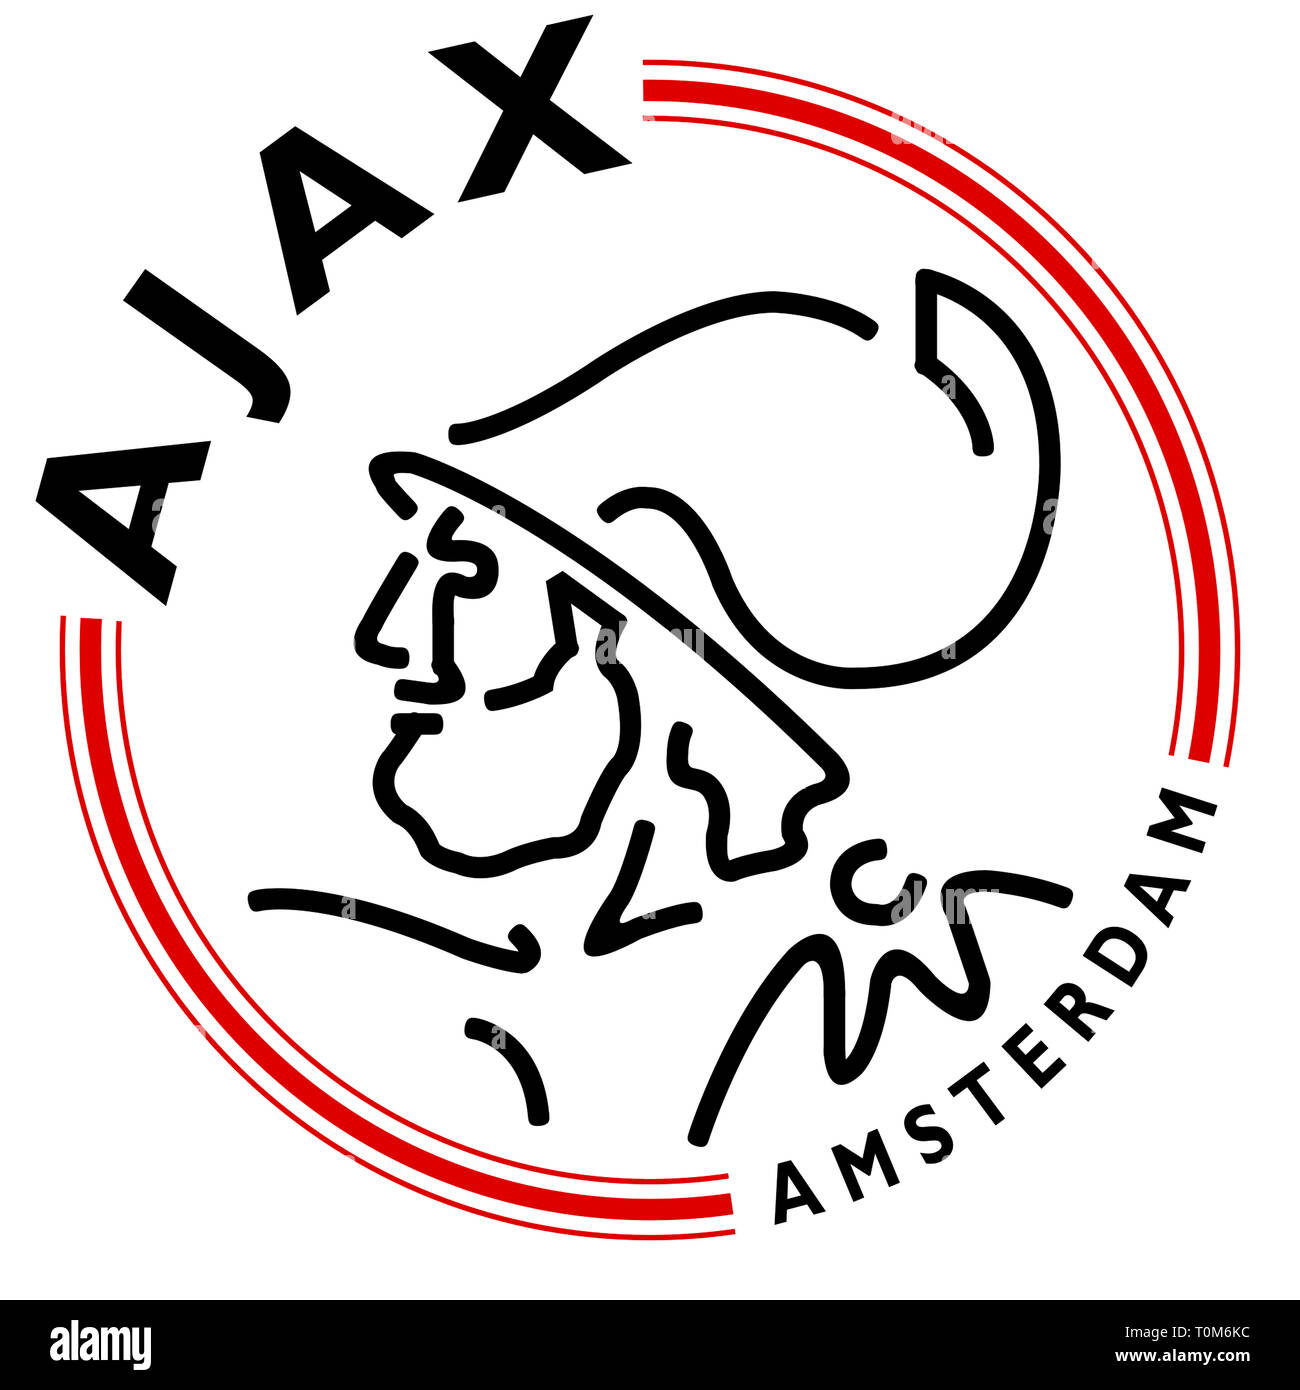 Logo de l'équipe néerlandaise de football Ajax Amsterdam - Pays-Bas Photo  Stock - Alamy